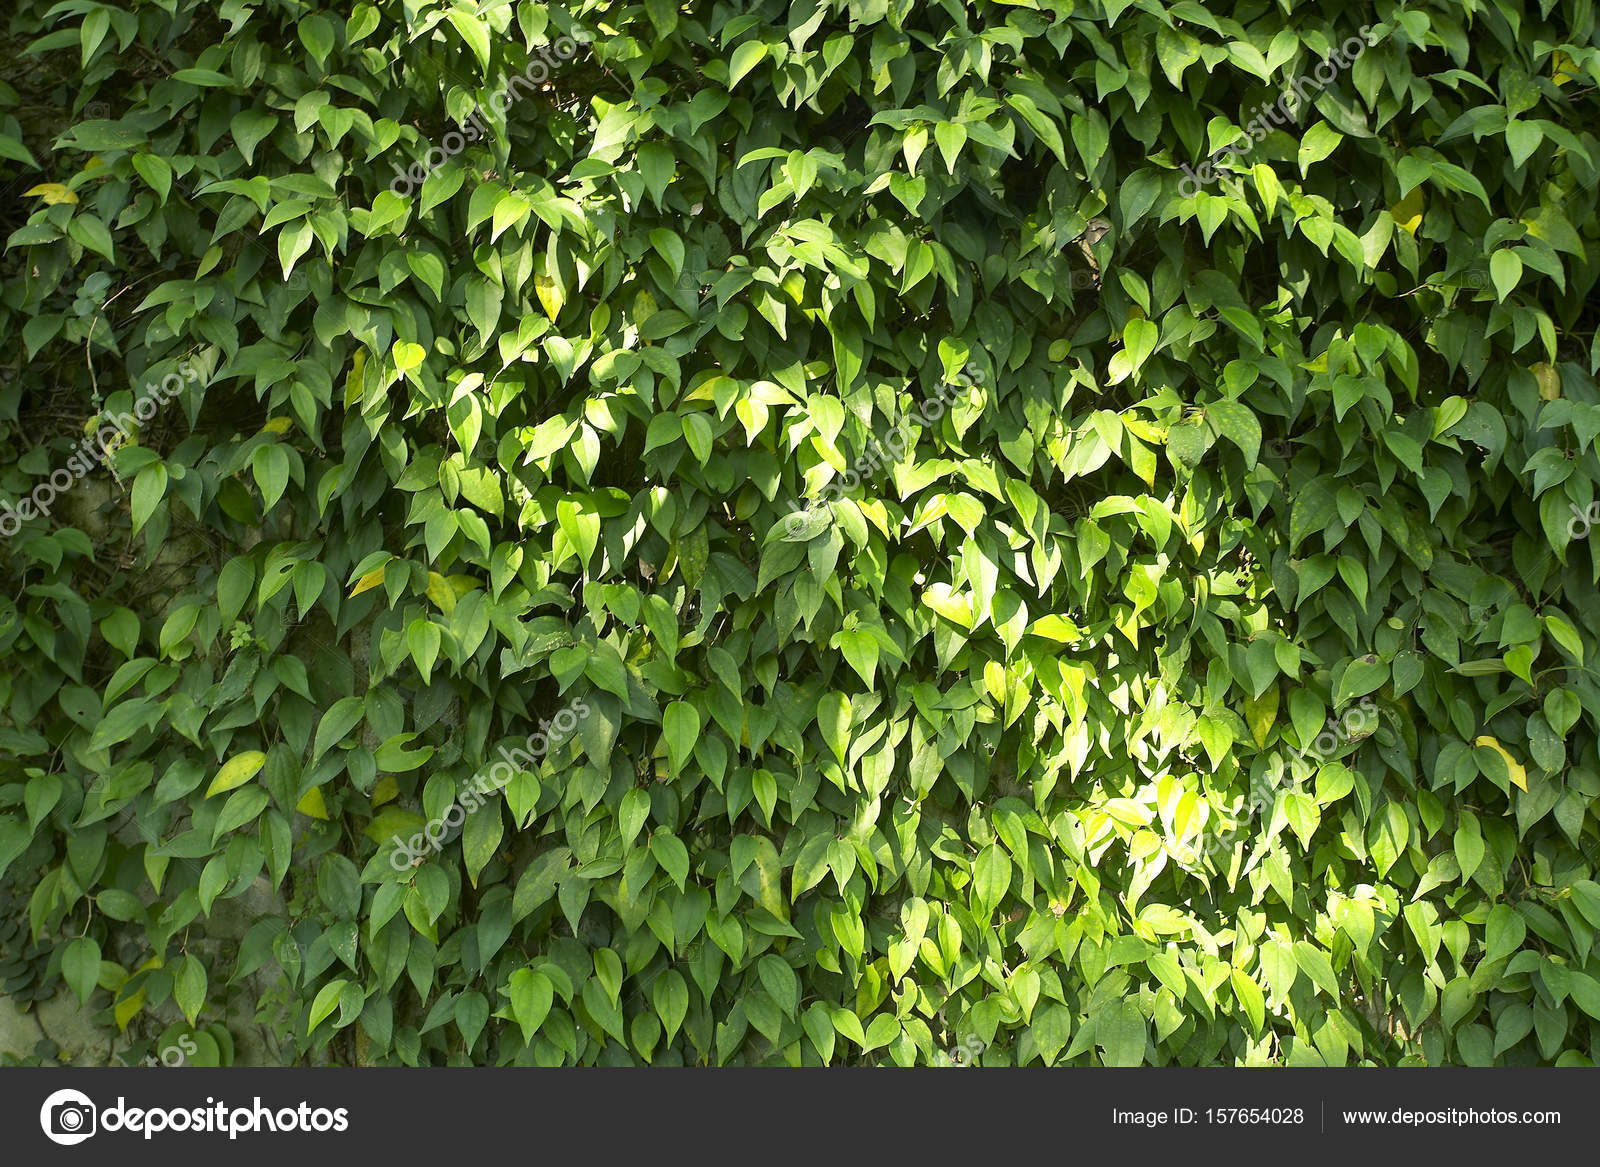 Depositphotos 157654028-stock-photo-foliage-wall-background.jpg